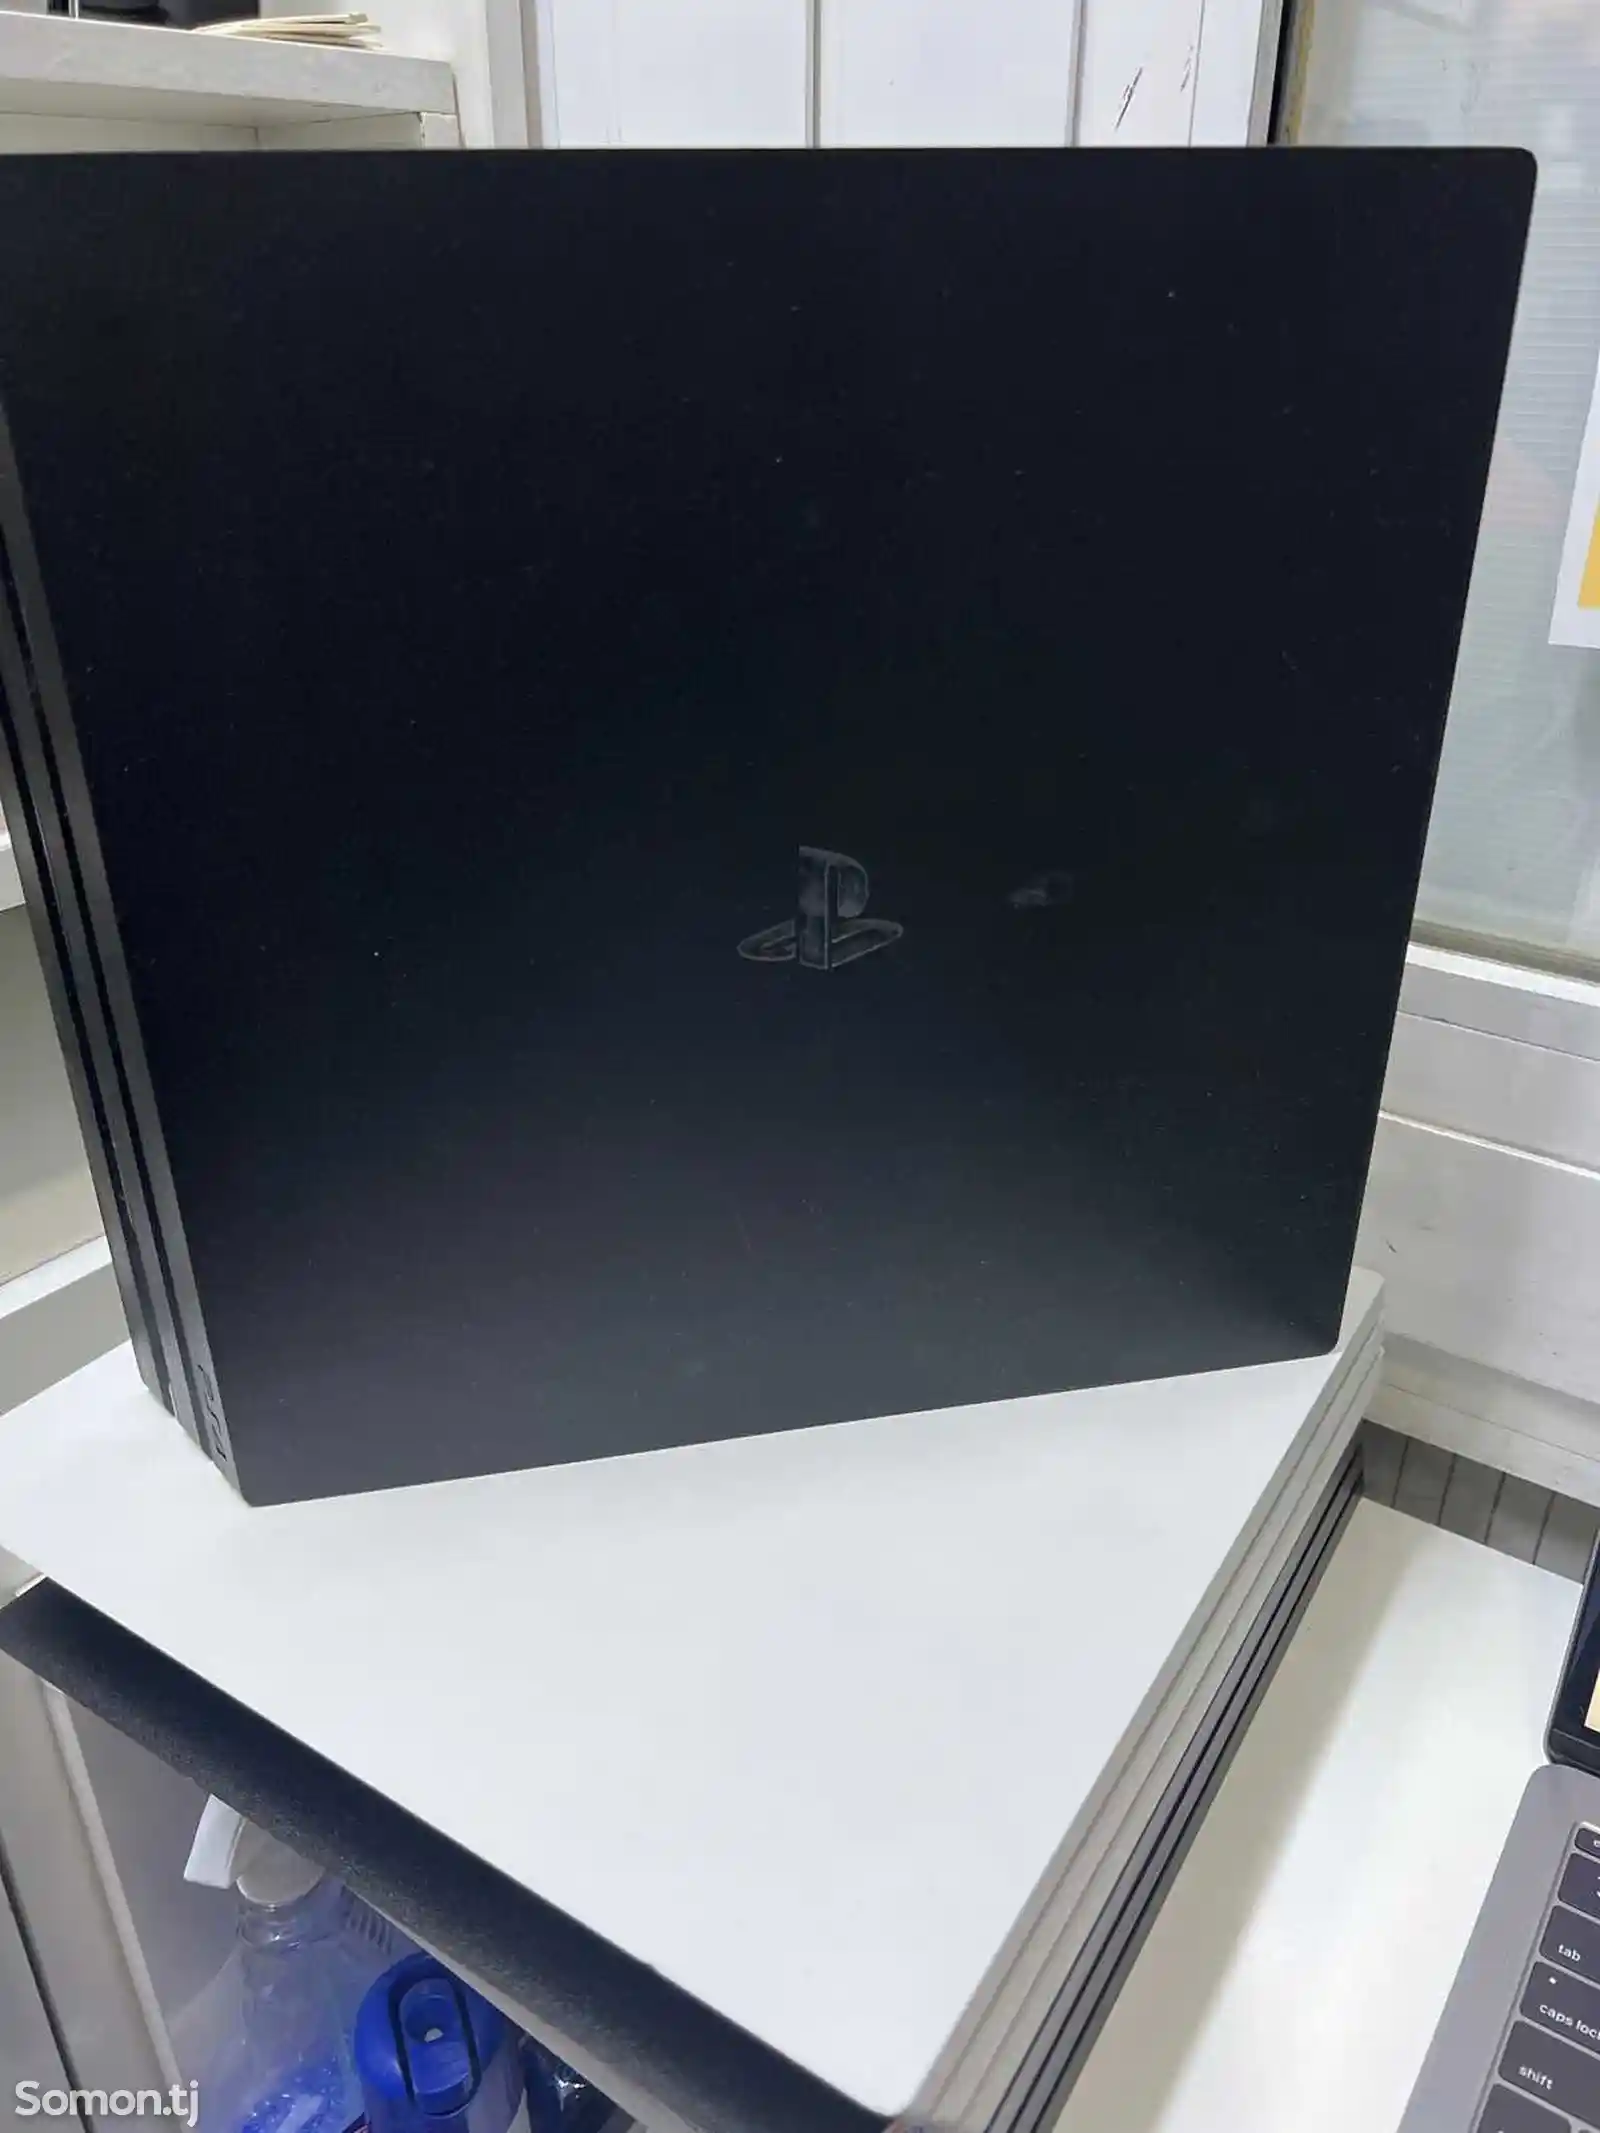 Игровая приставка Sony PlayStation 4 pro 1TB